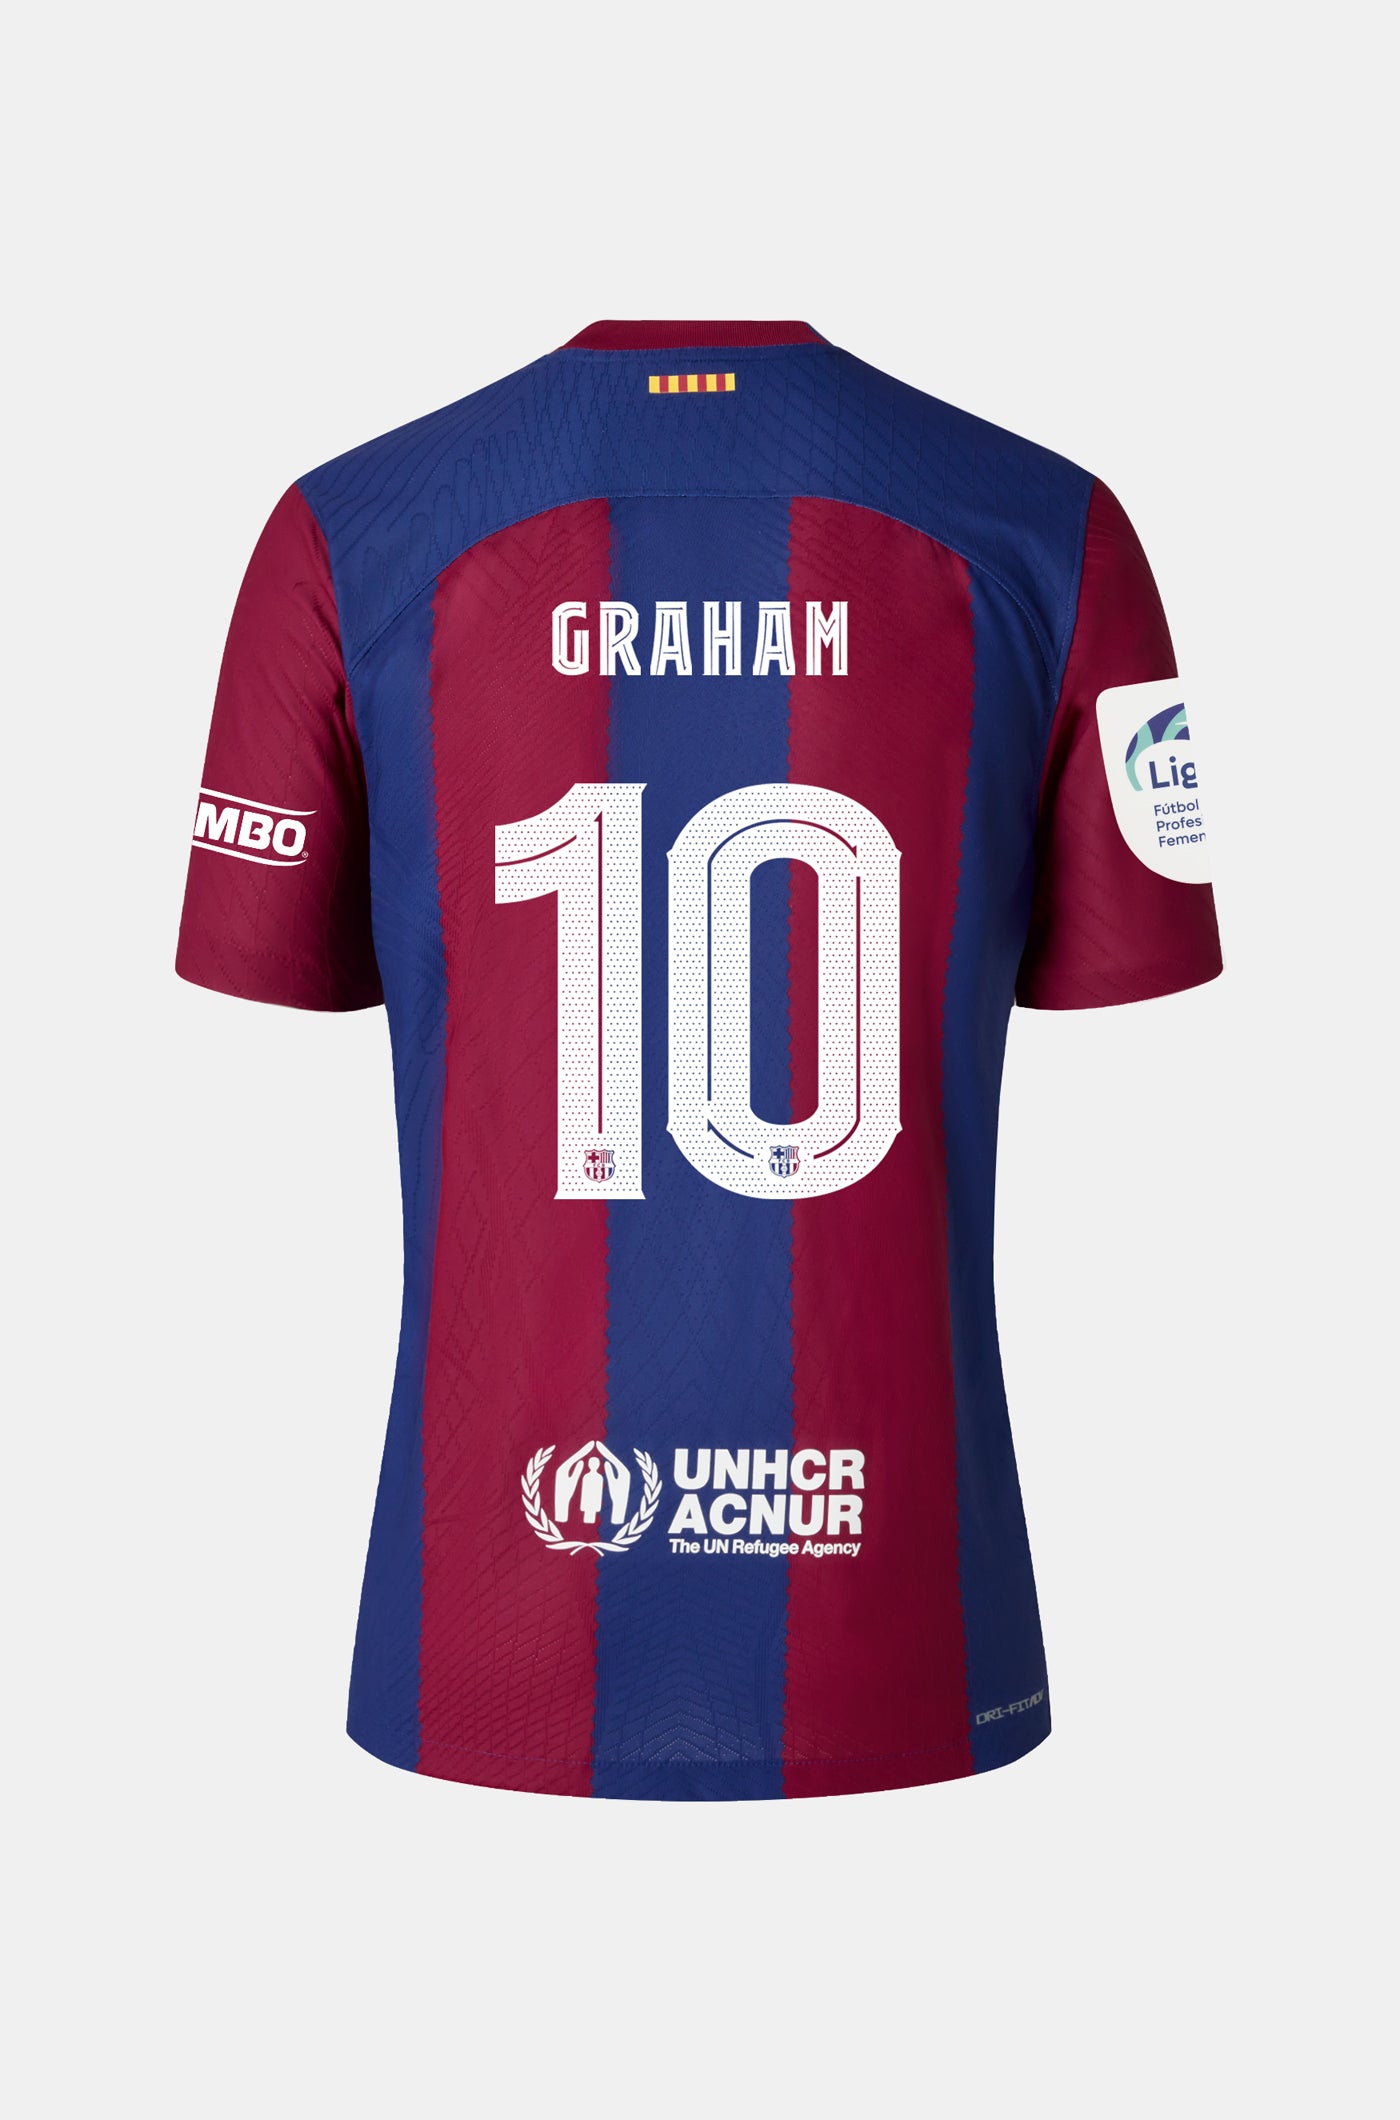 Liga F FC Barcelona home shirt 23/24 Player's Edition - GRAHAM